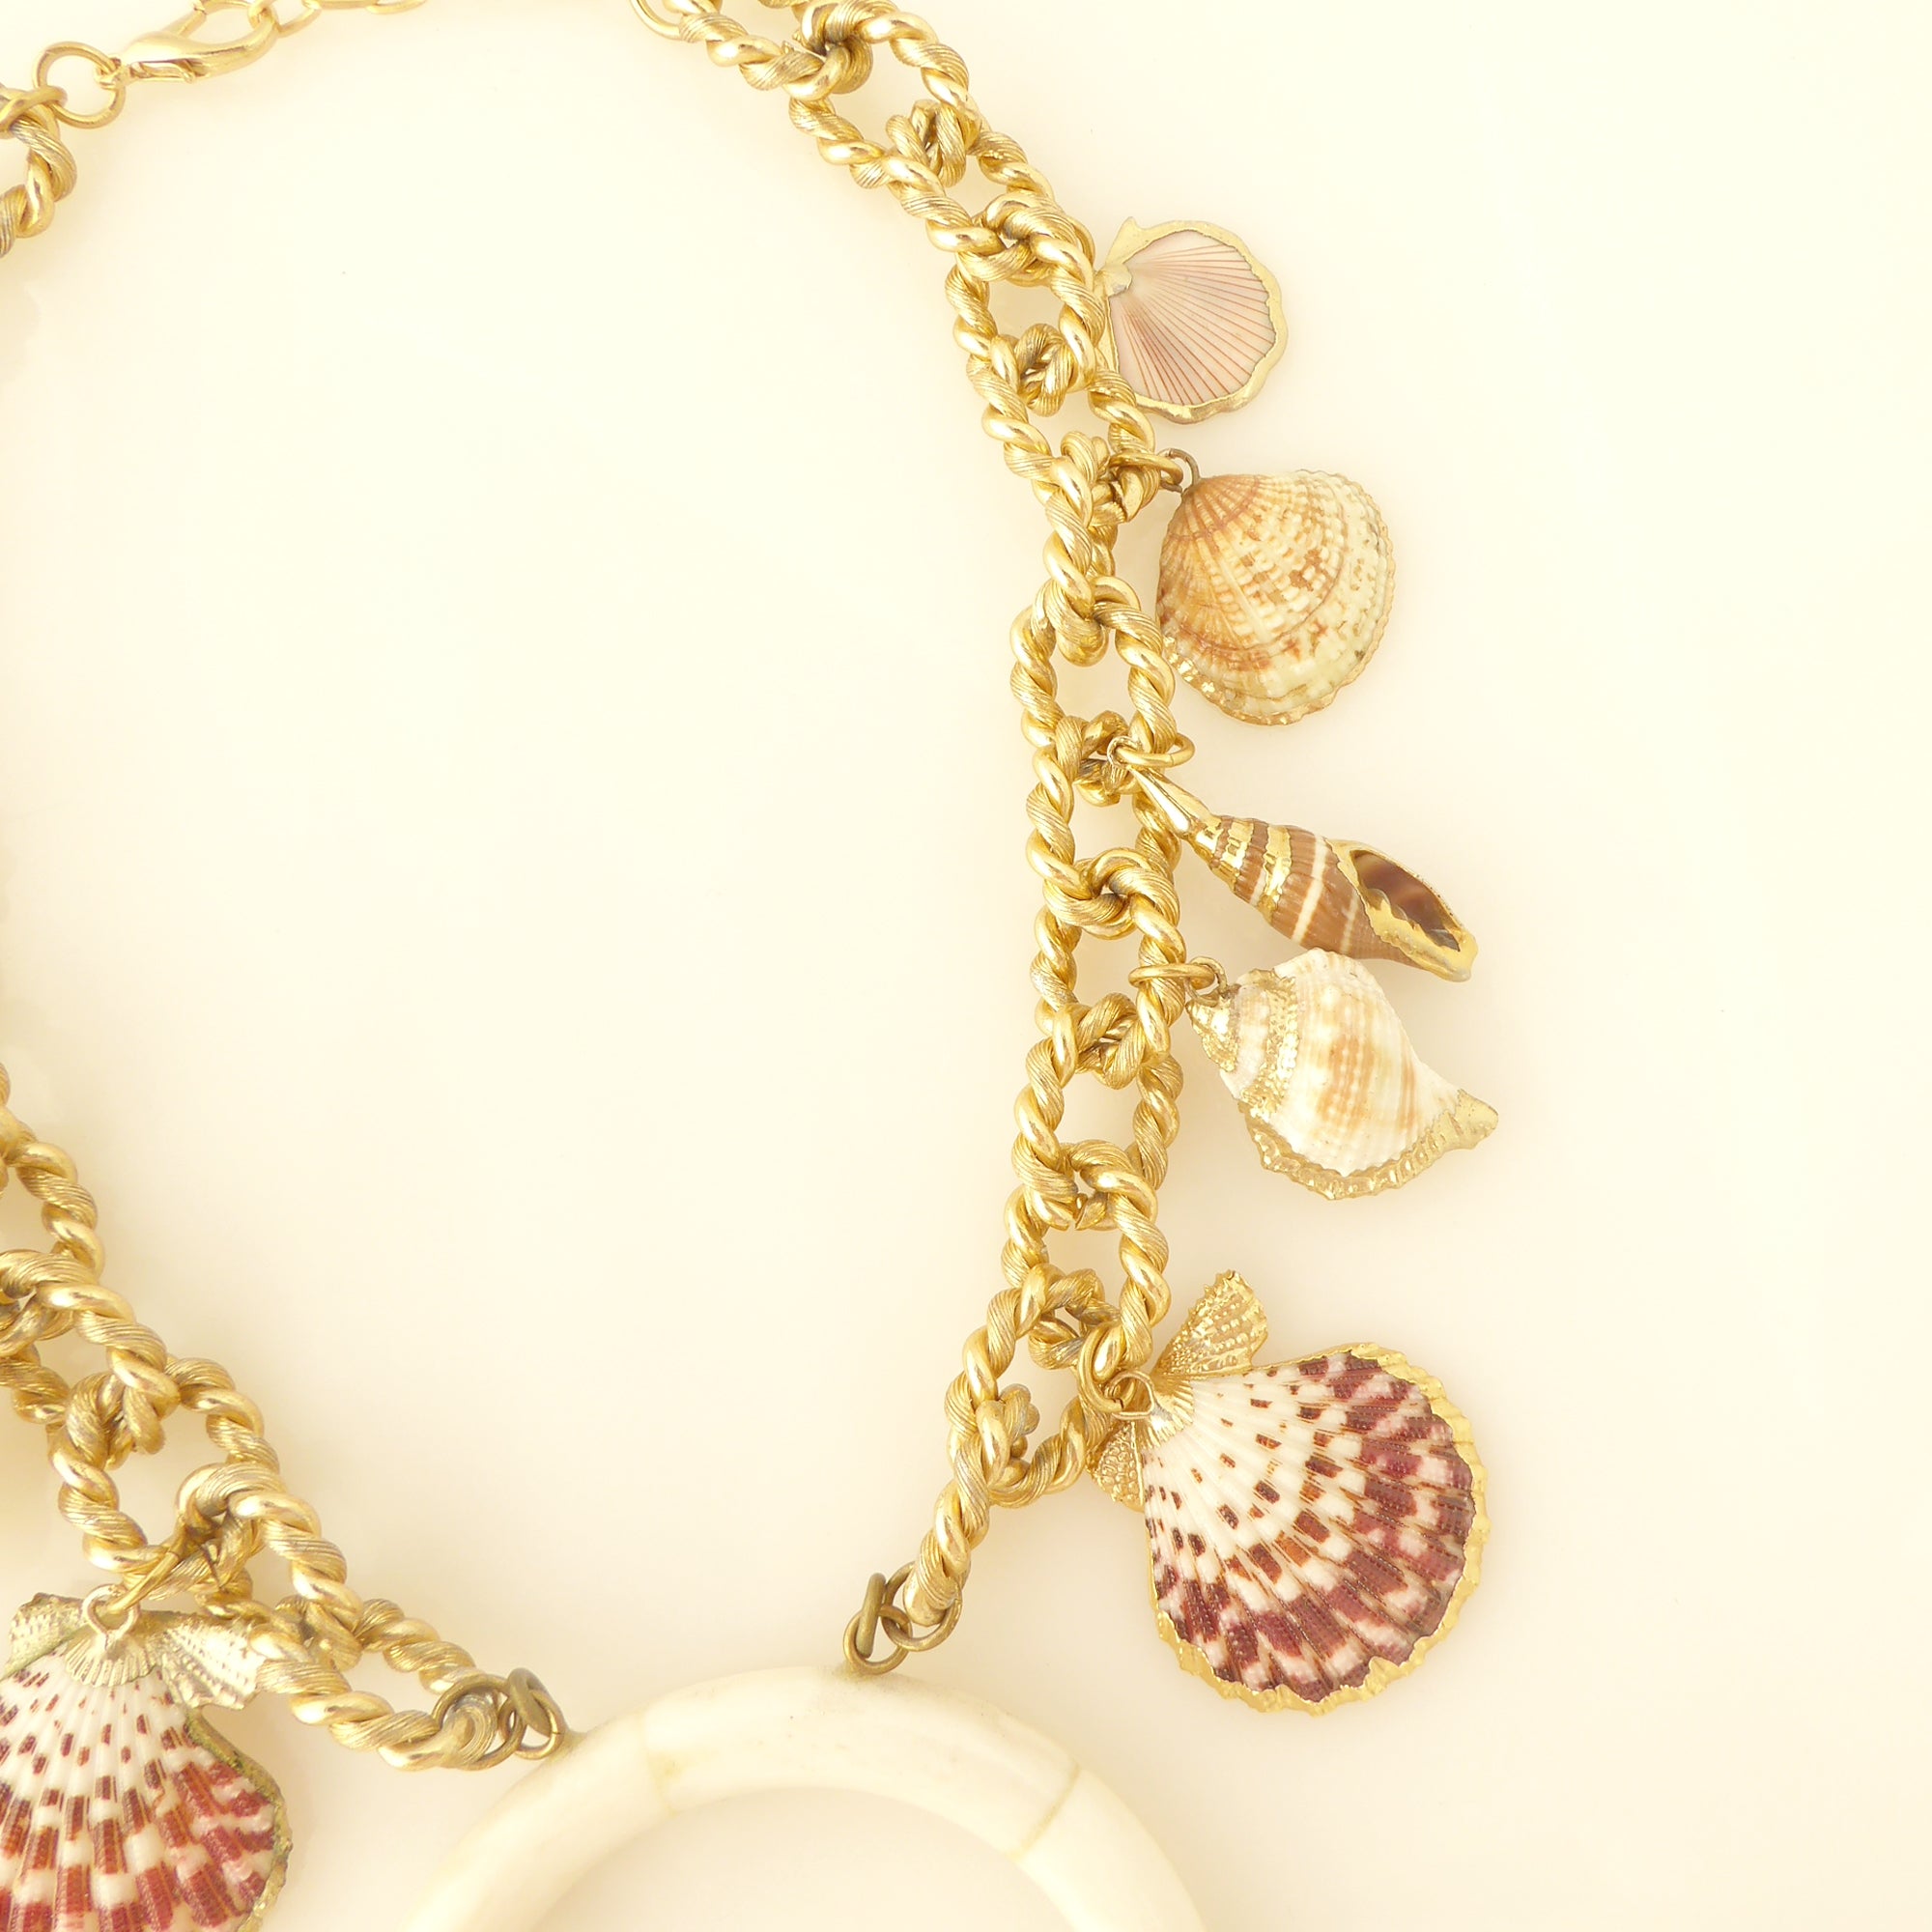 Seashell necklace by Jenny Dayco 5